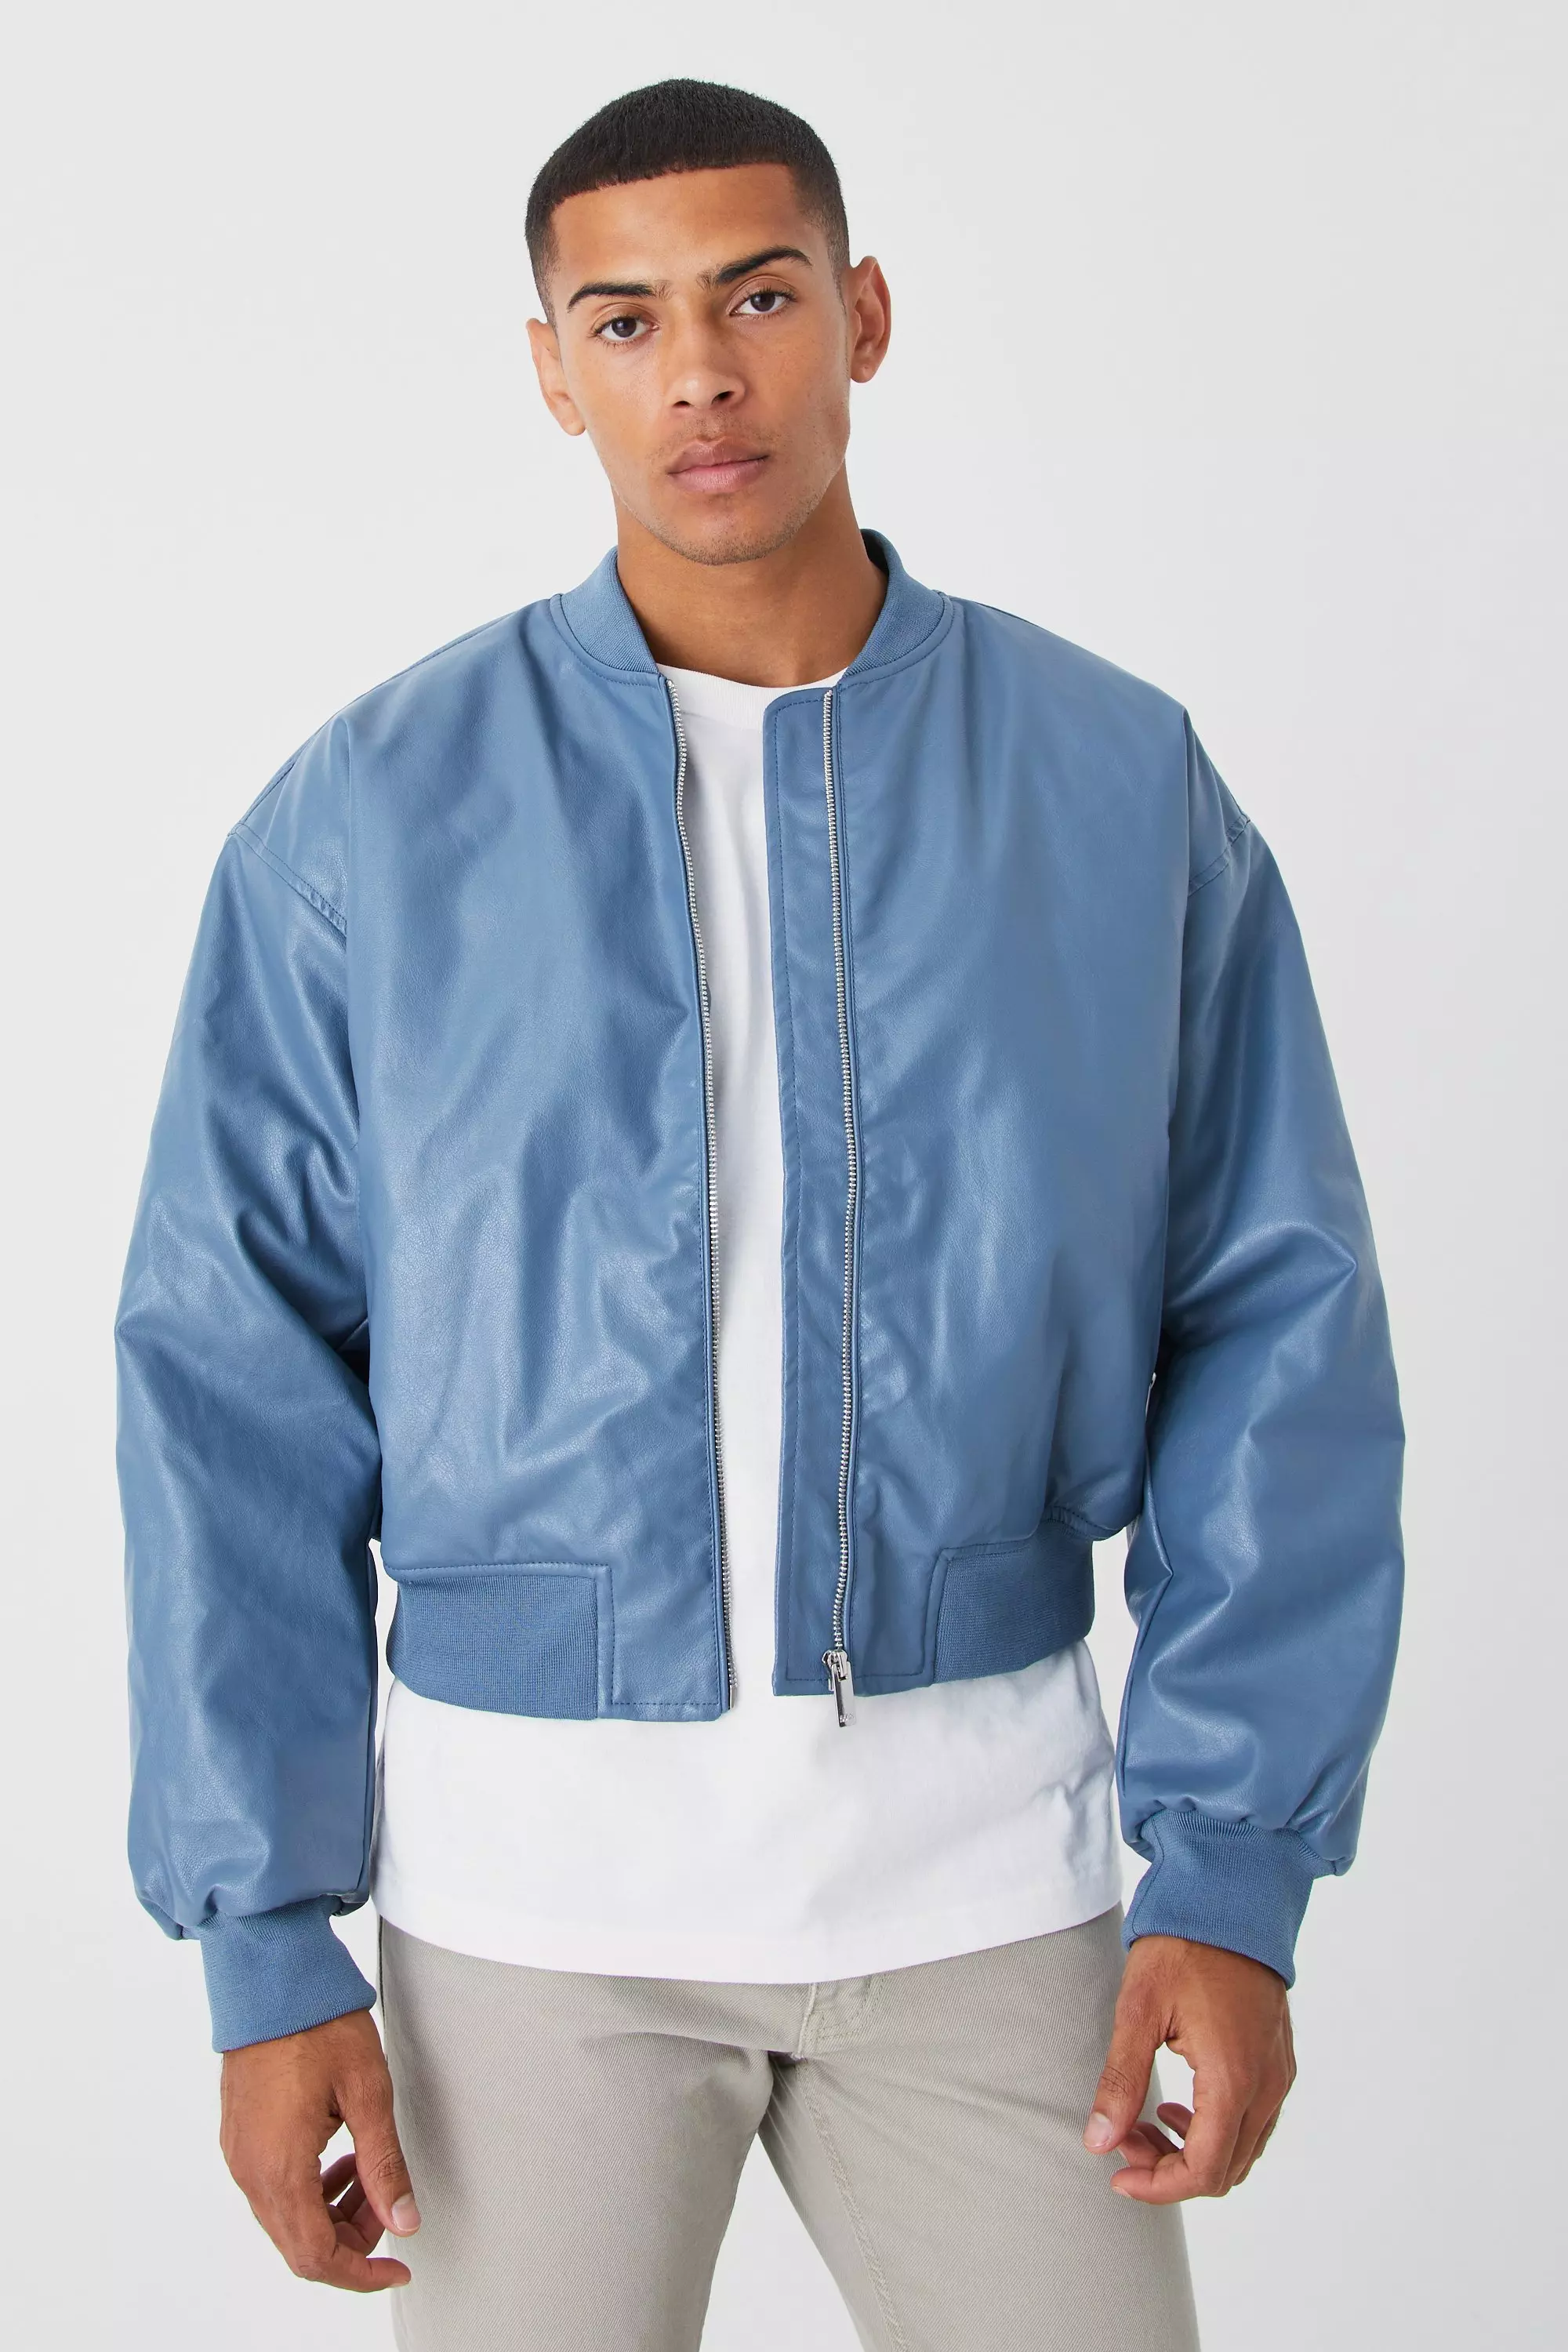 boohooMAN Boxy Limited Edition Tiger Varsity Jacket - Blue - Size XS